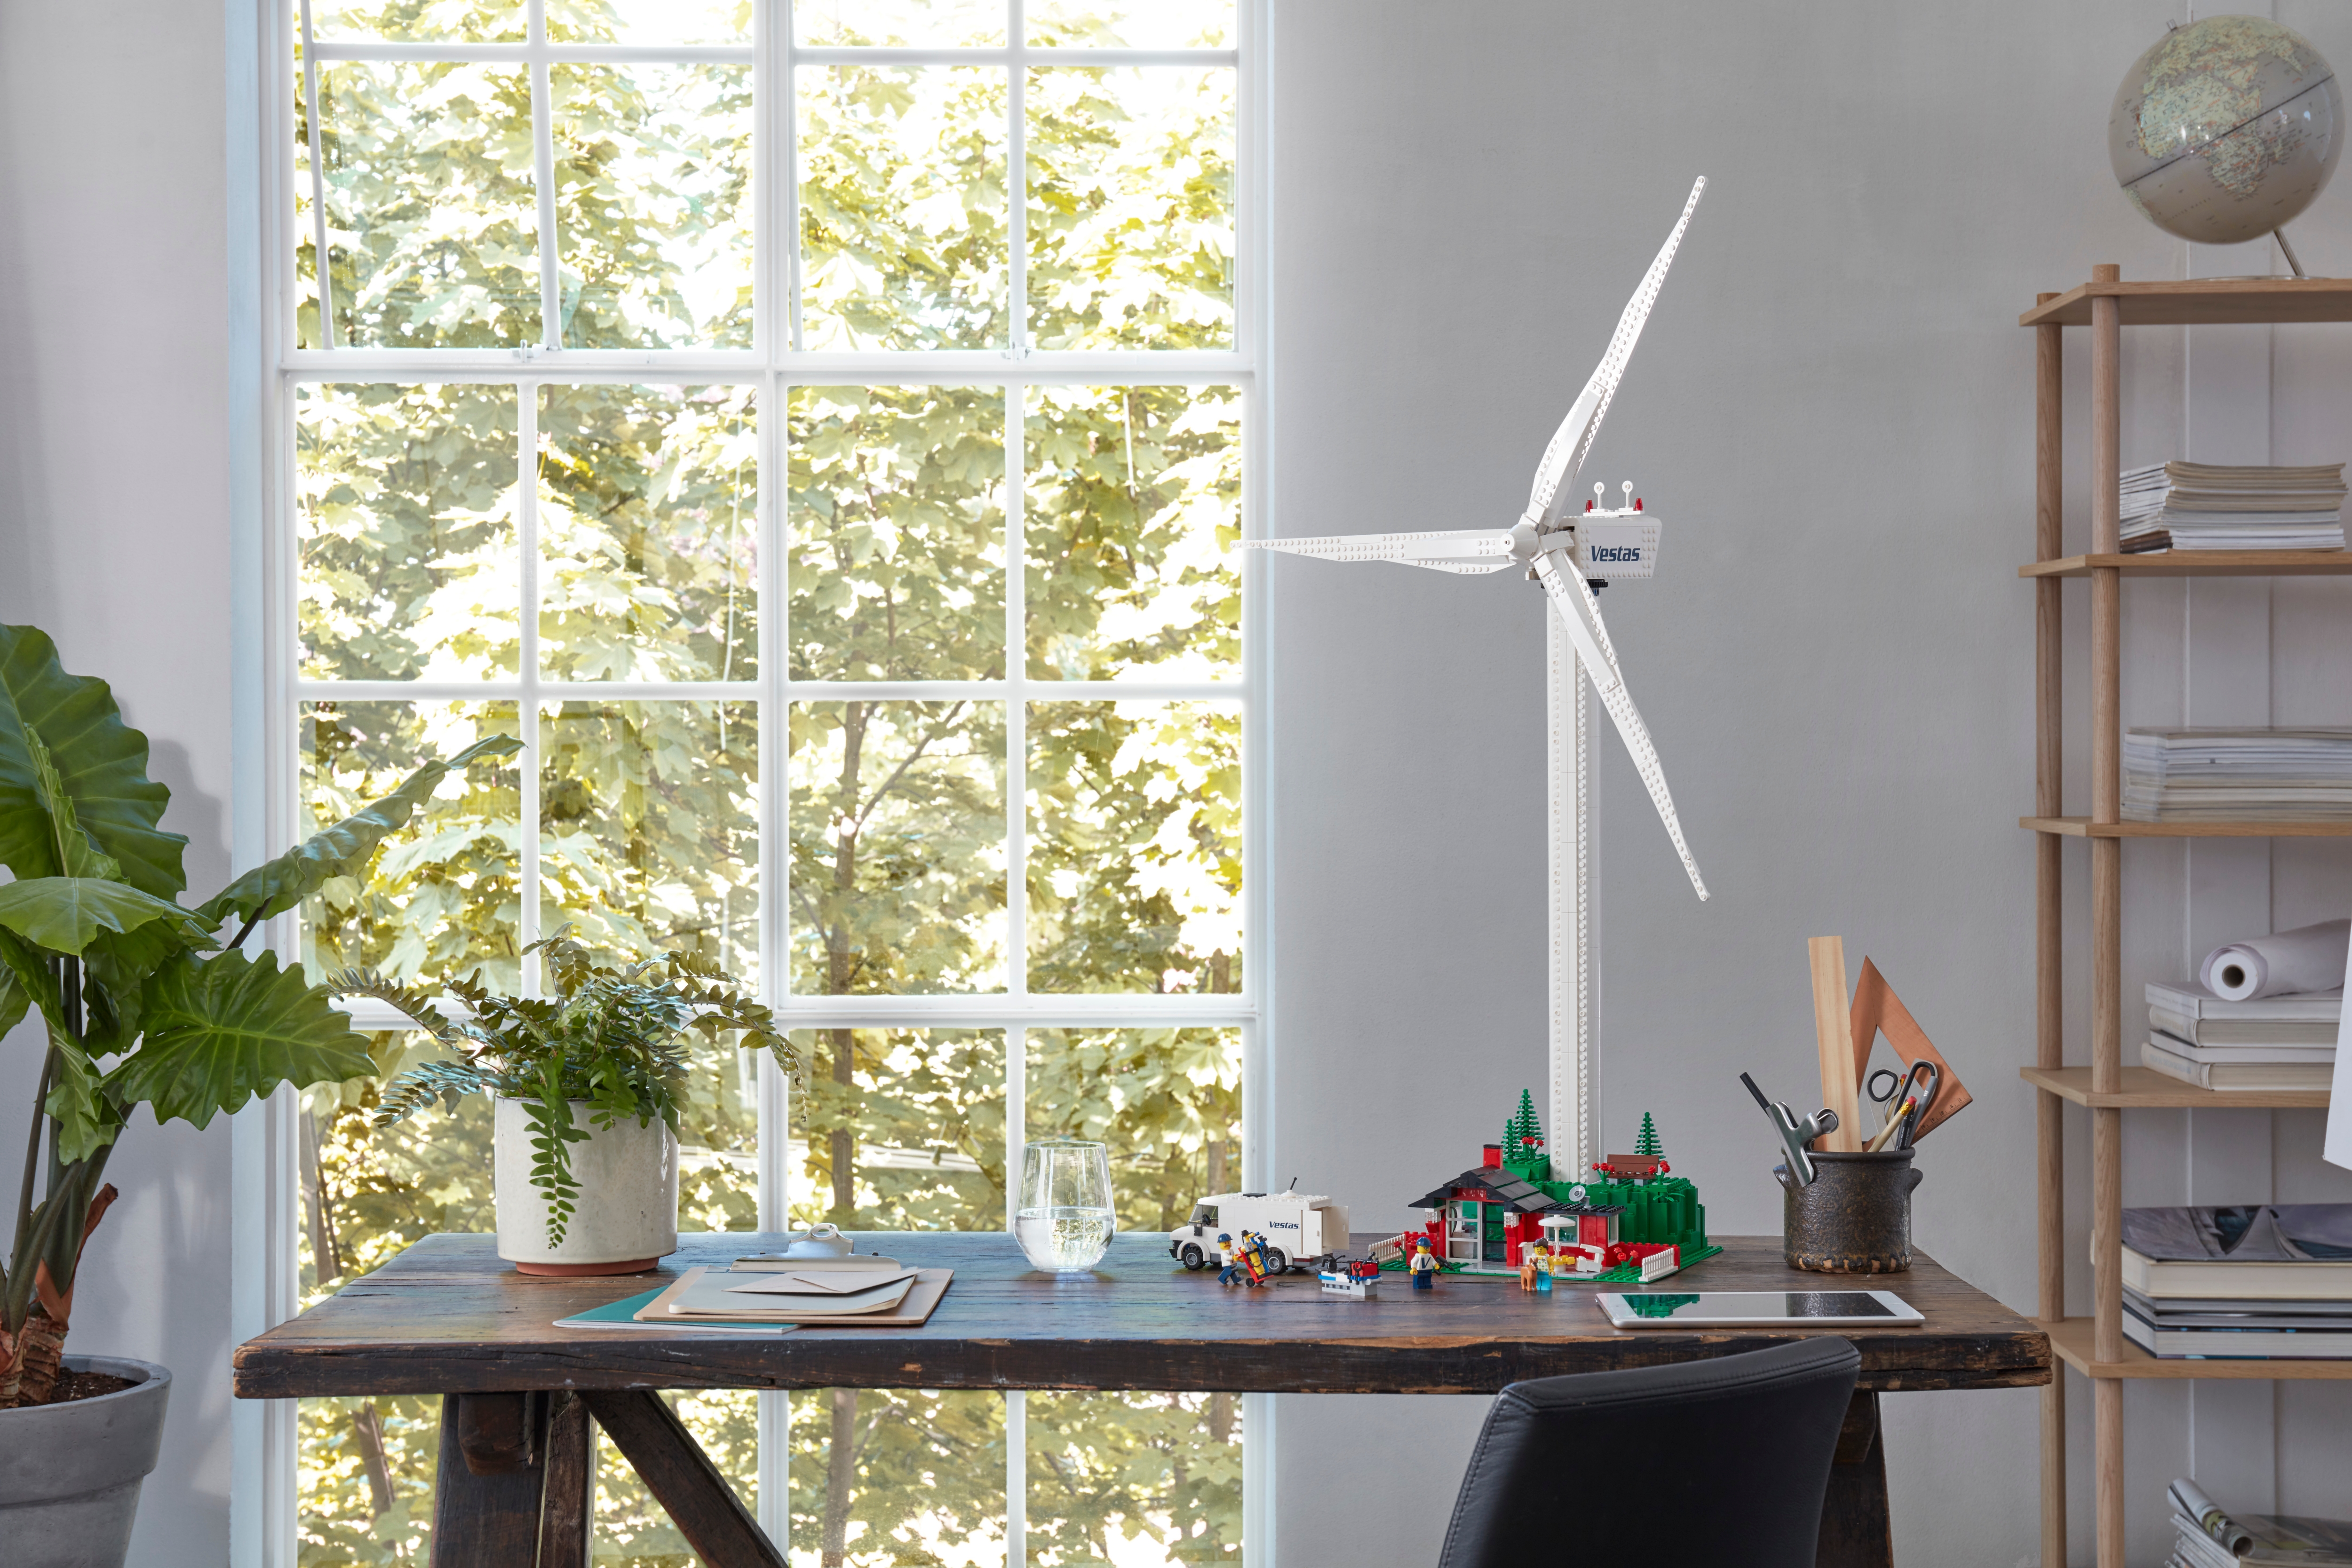 Vestas Wind Turbine 10268 Creator Expert | Buy online at Official LEGO® Shop